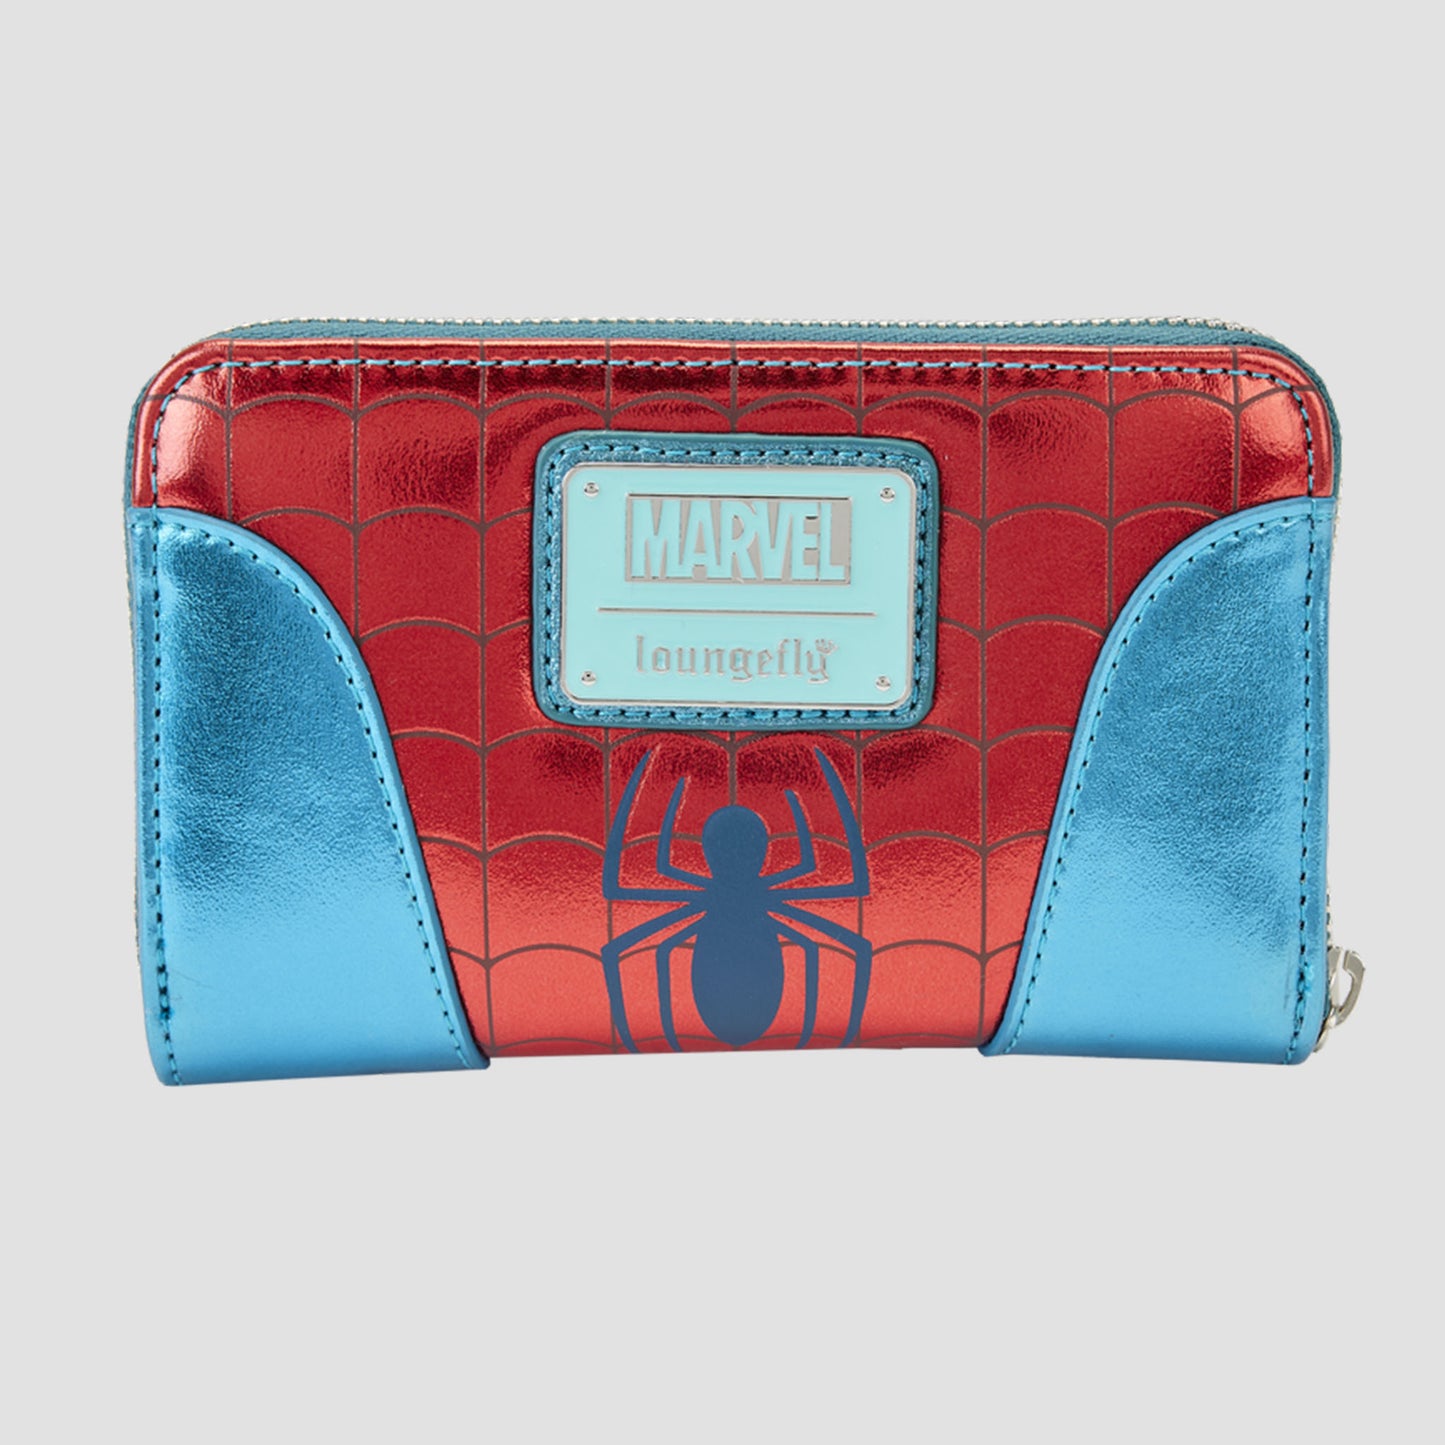 Spider-Man (Marvel) Metallic Cosplay Zip-Around Wallet by Loungefly ...